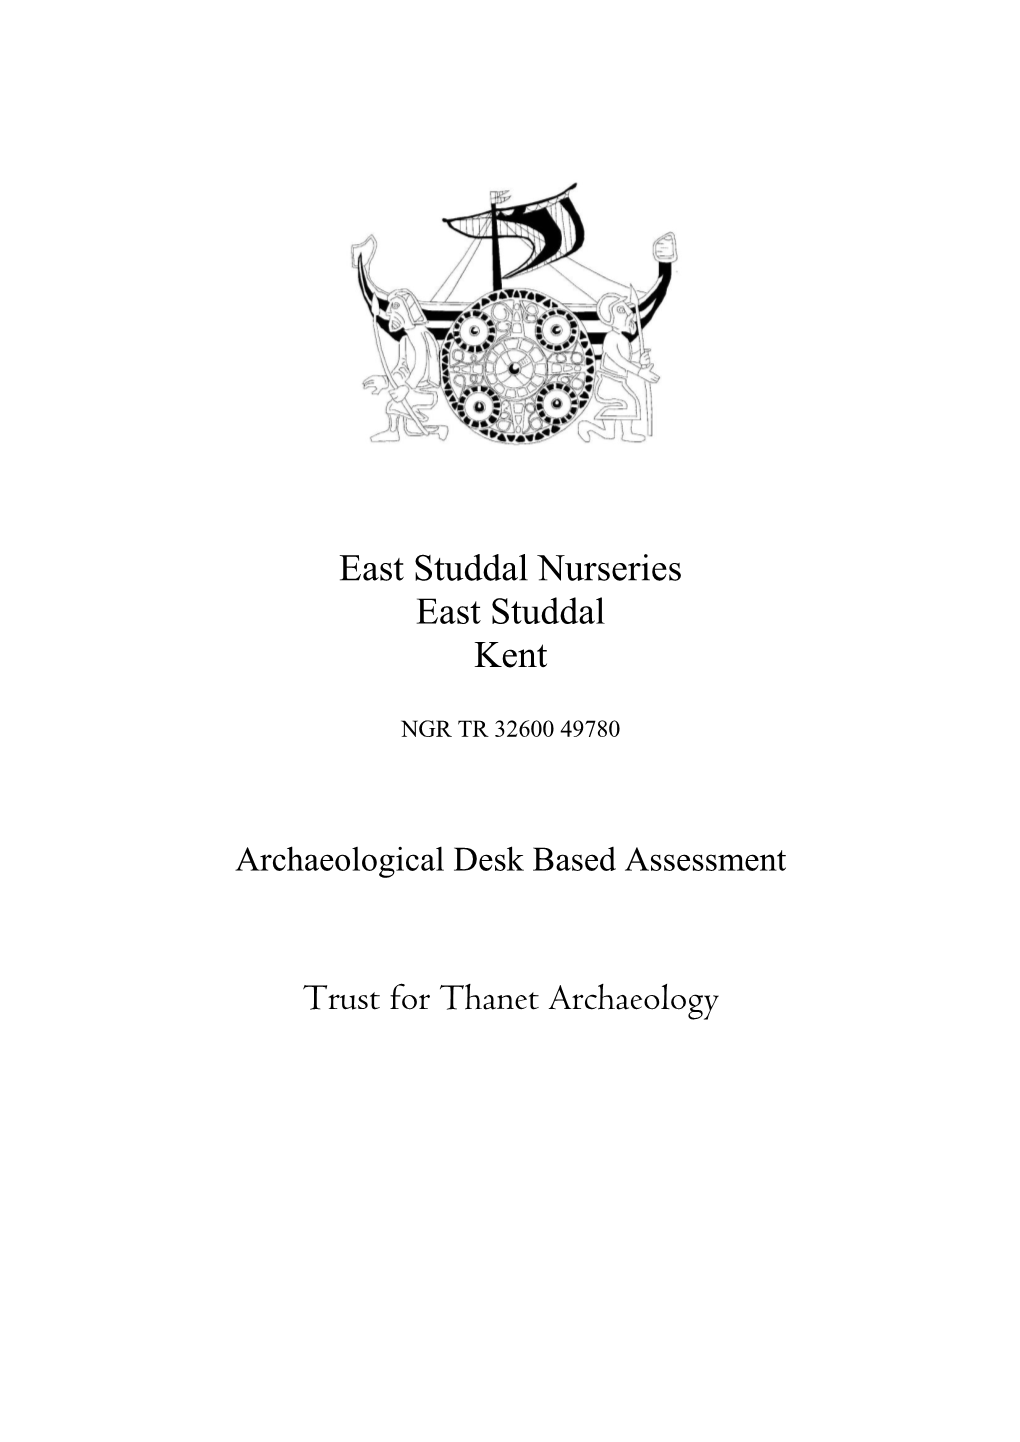 East Studdal Nurseries East Studdal Kent Trust for Thanet Archaeology